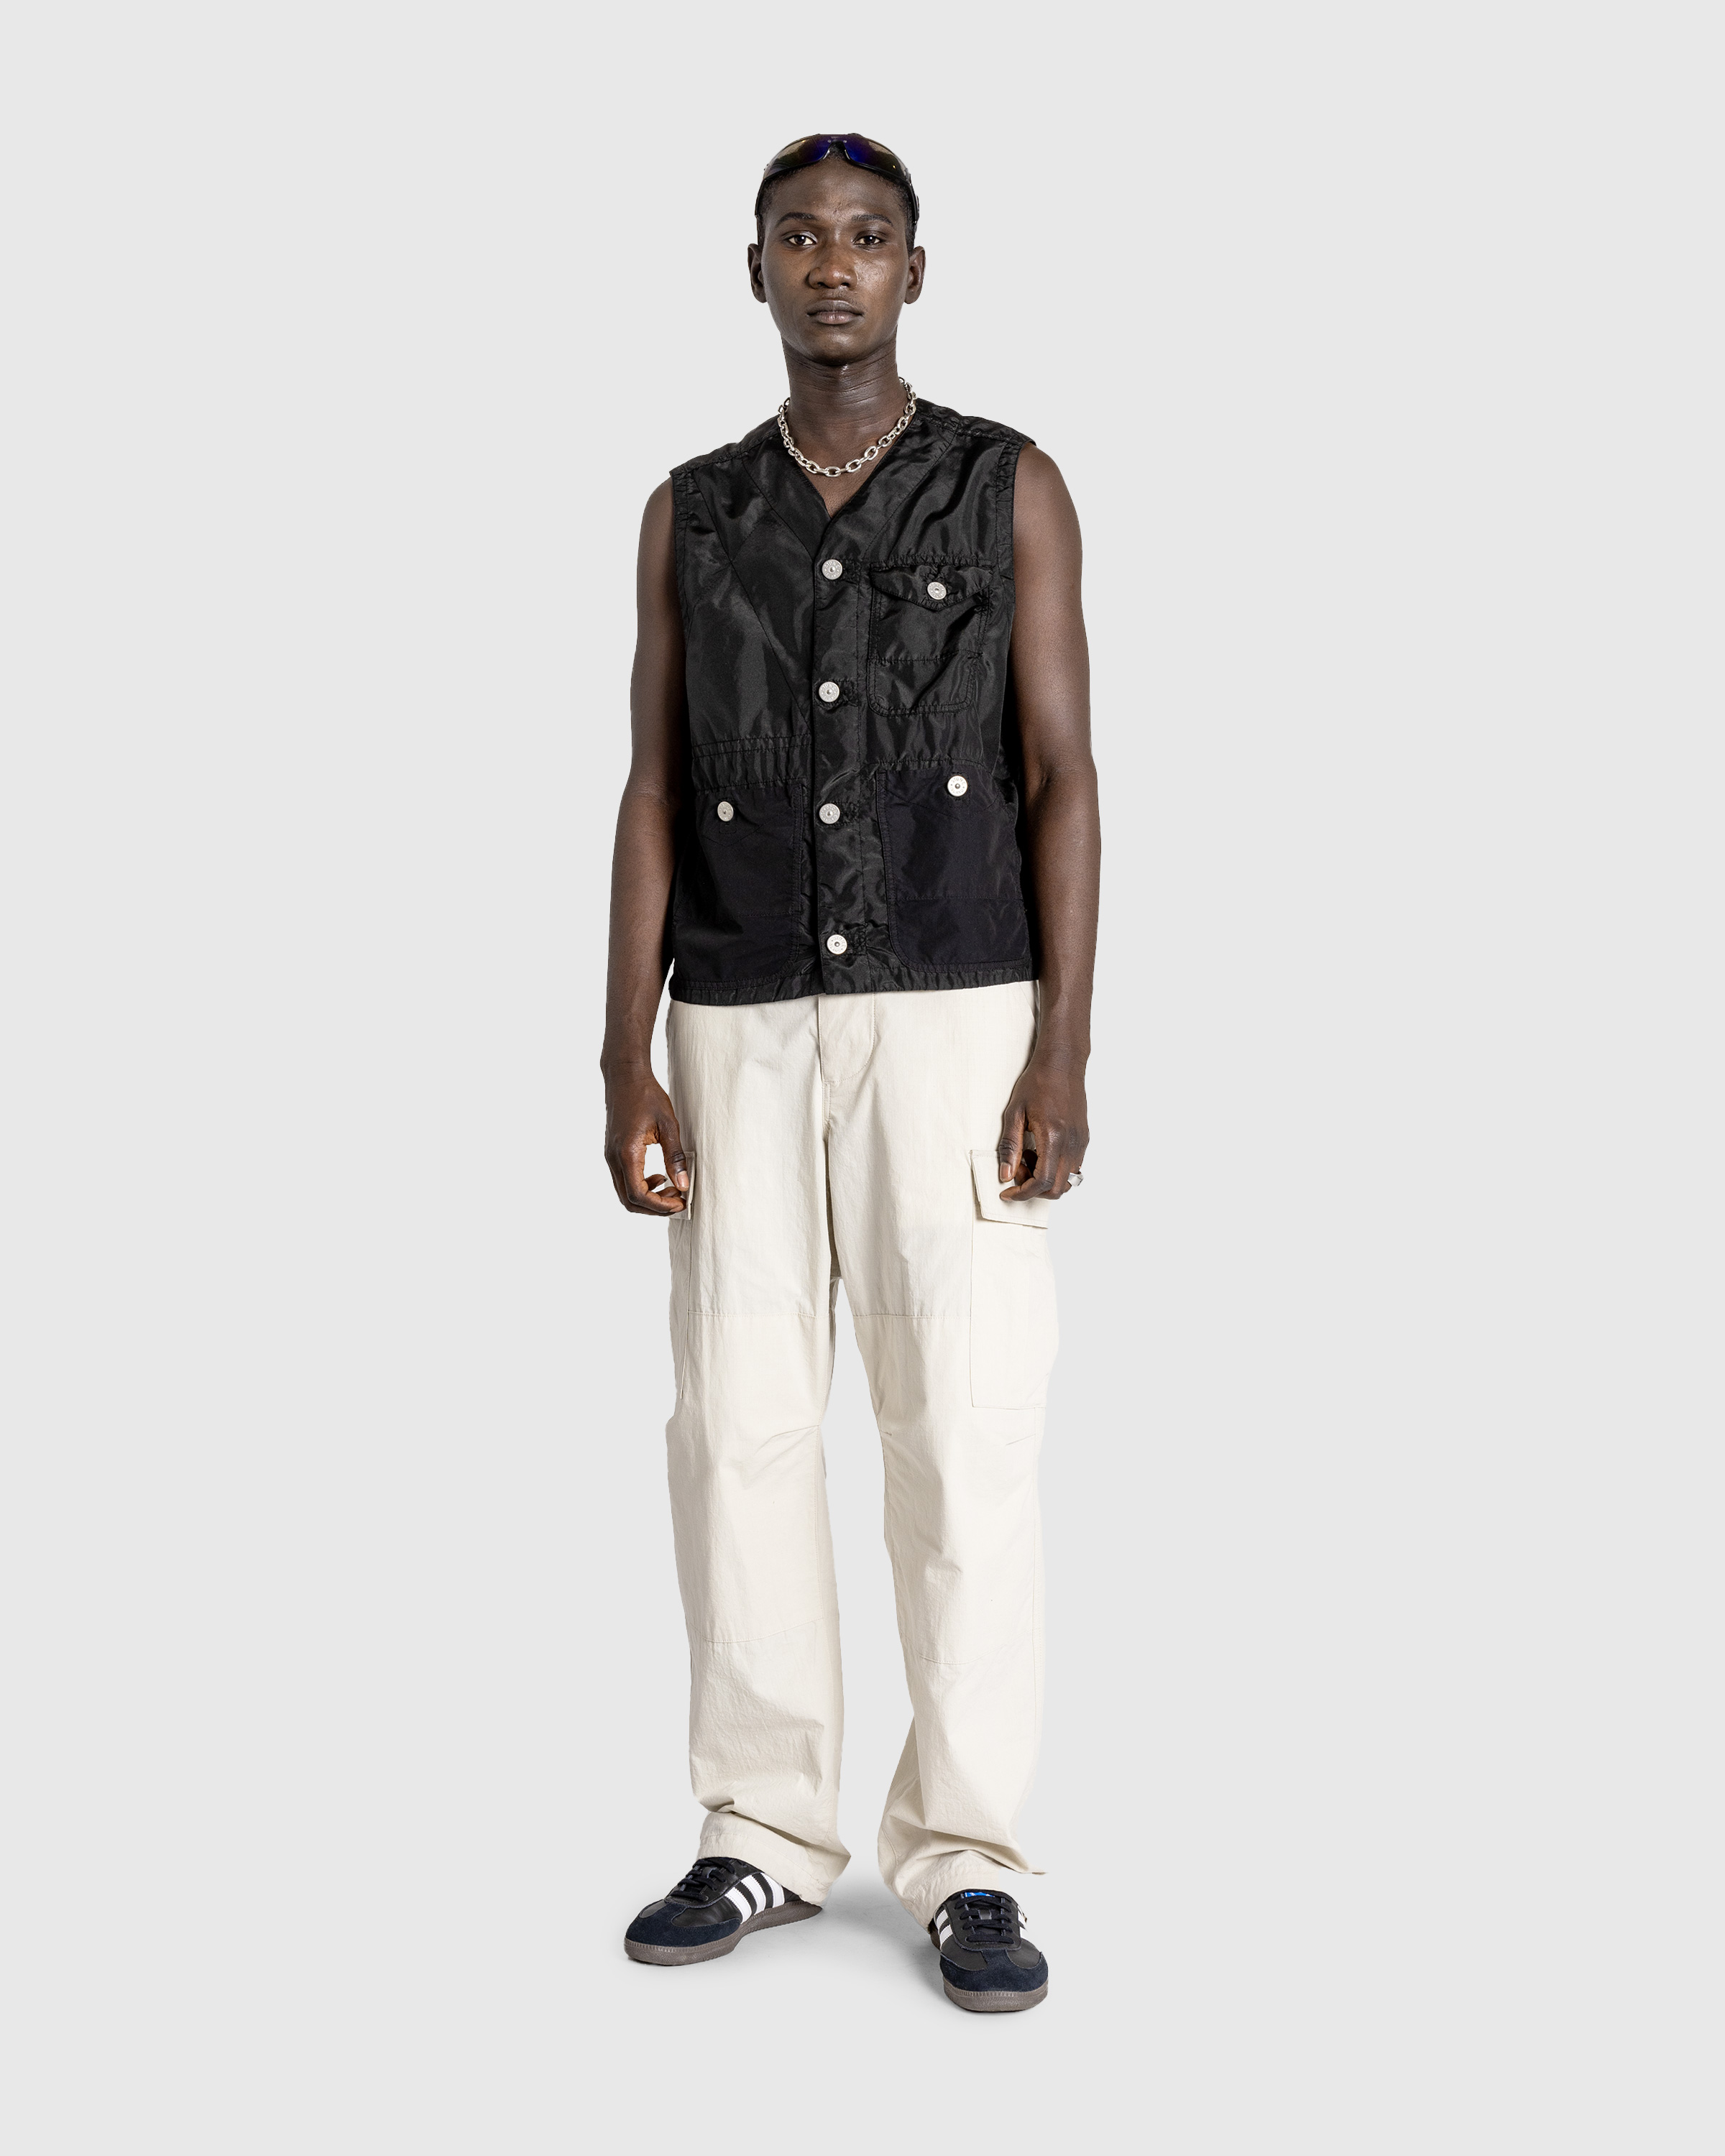 Stone Island – Garment-Dyed Vest Black - Outerwear - Black - Image 4